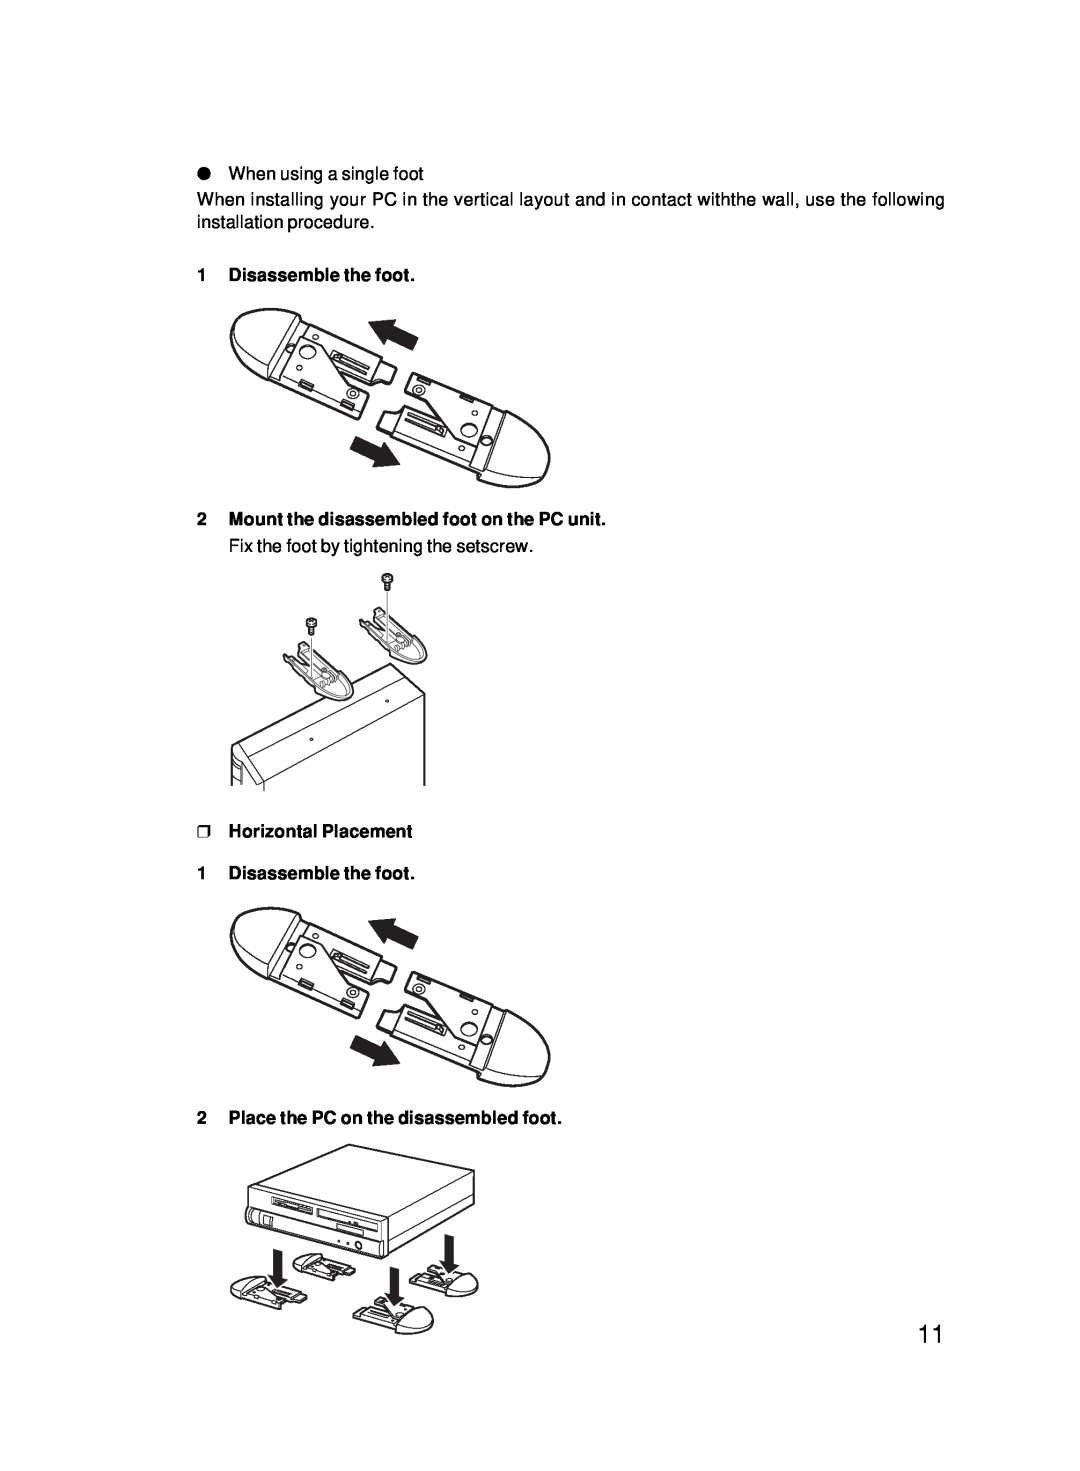 Fujitsu 5000 user manual When using a single foot, Horizontal Placement 1 Disassemble the foot 